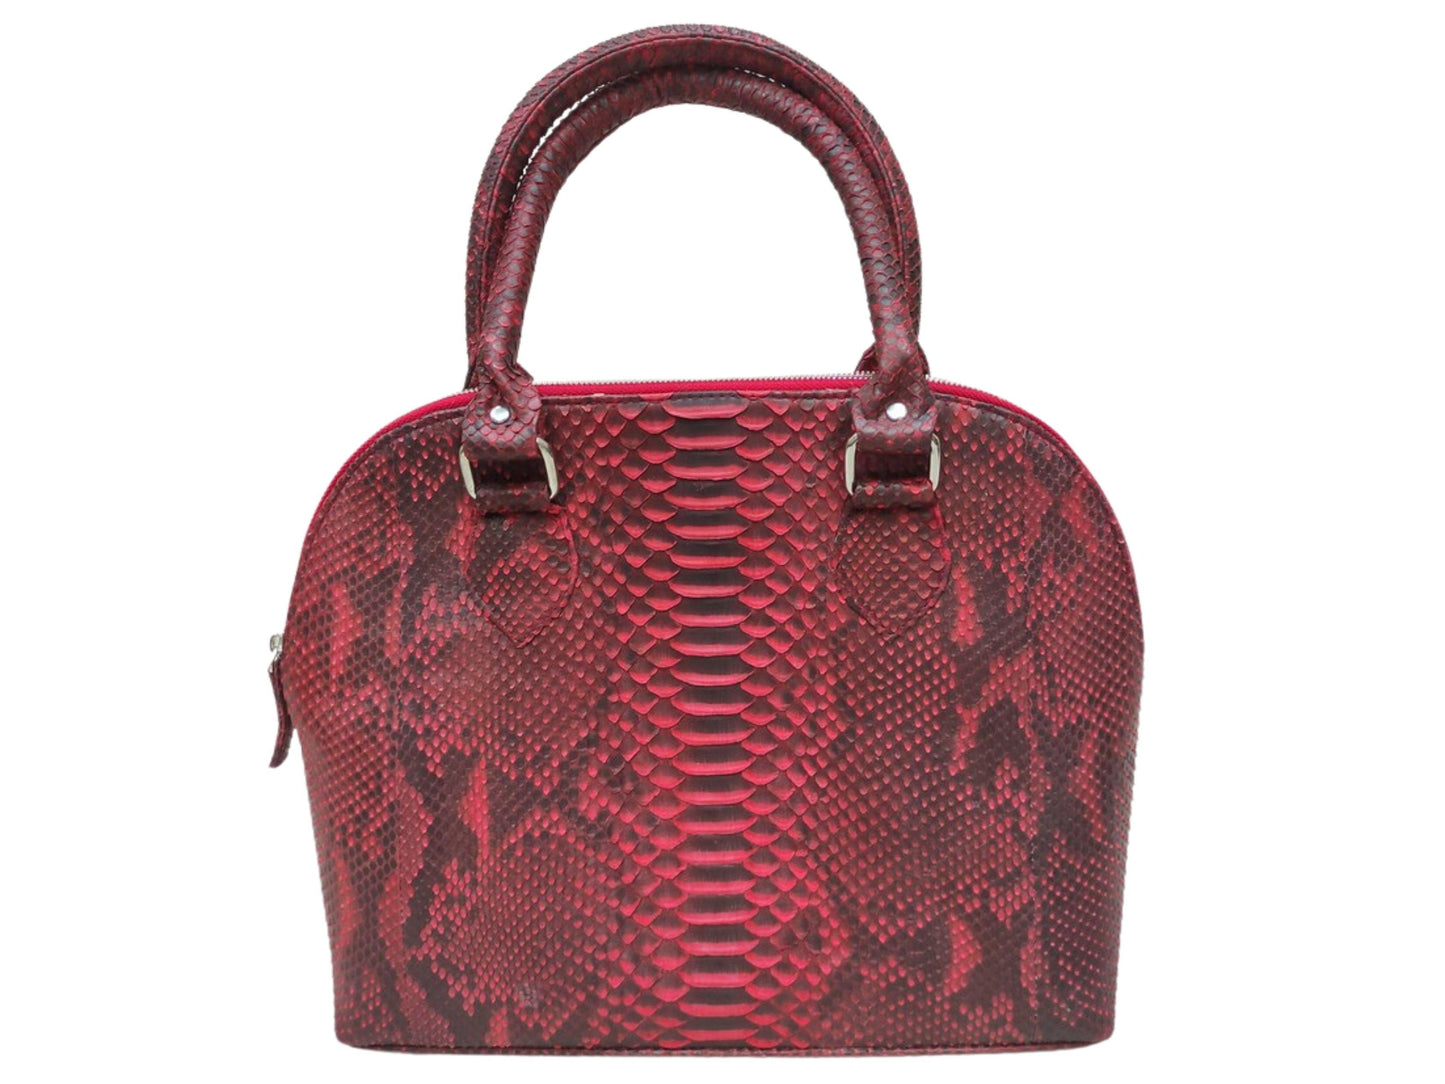 Laptop Bags Snakeskin Tote Laptop Bag,Trendy Work Bag,Fashionable Carryall Red Python Jacket by LFM Fashion